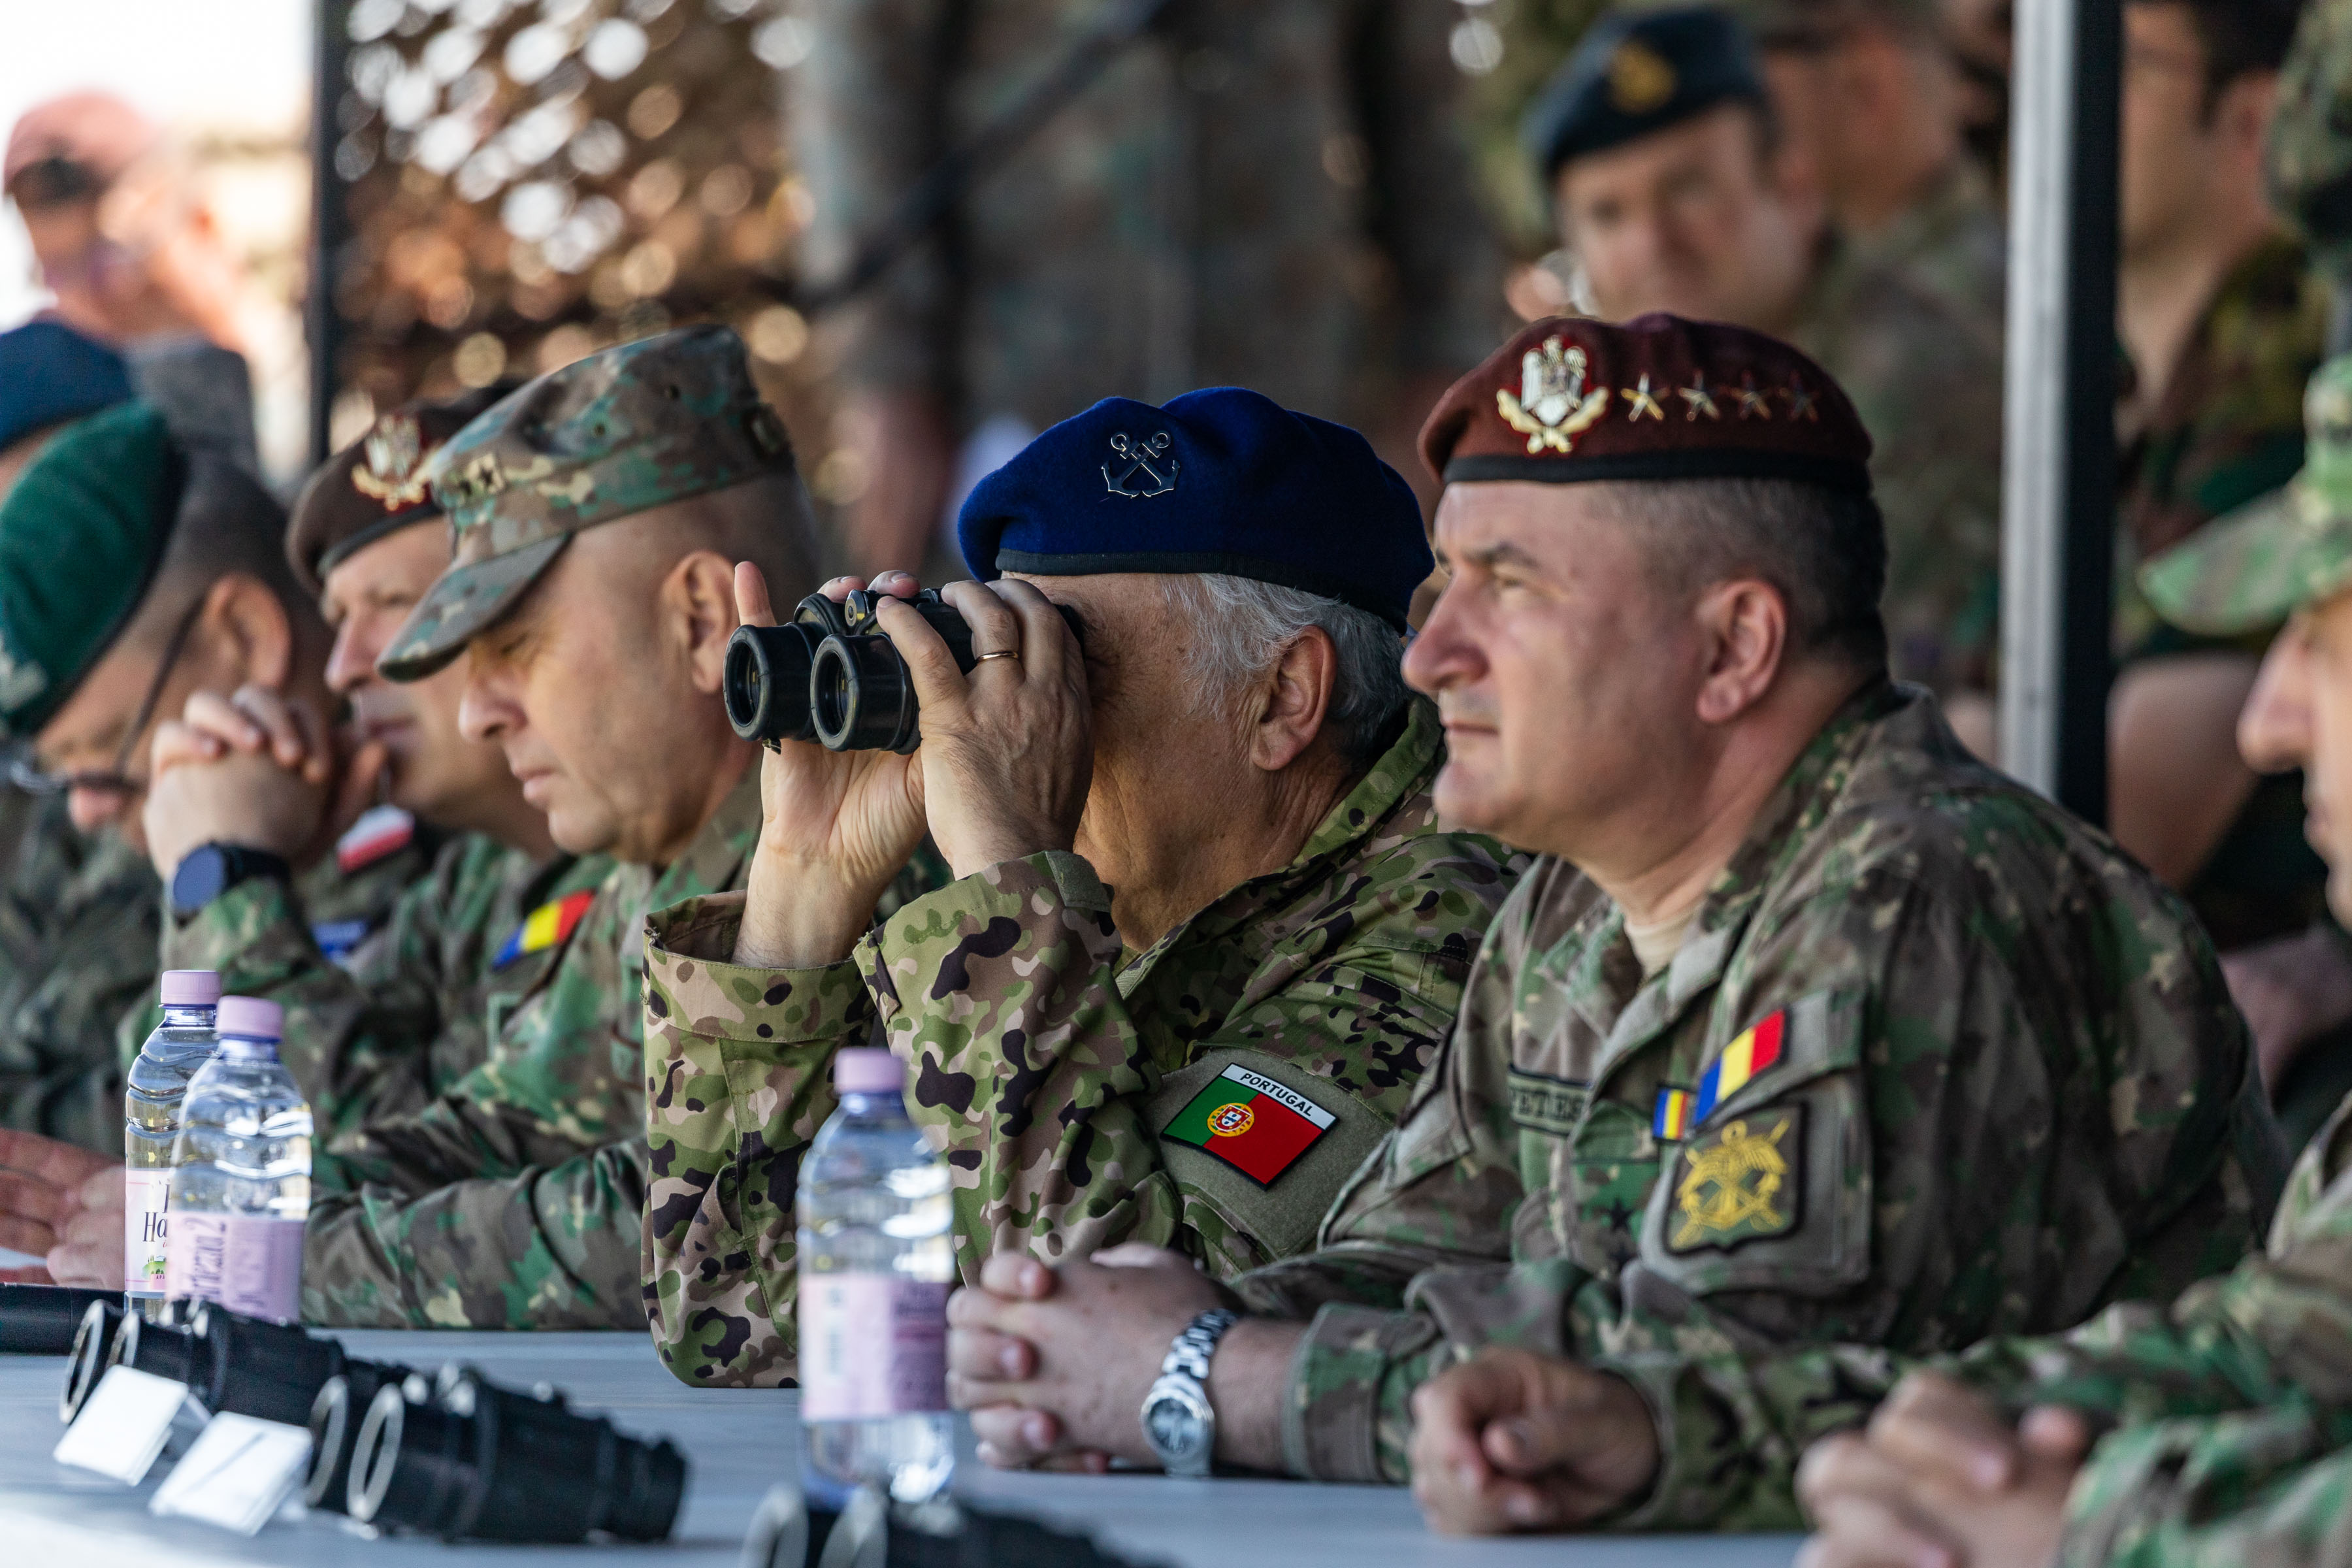 Romanian personnel sitting with binoculars.